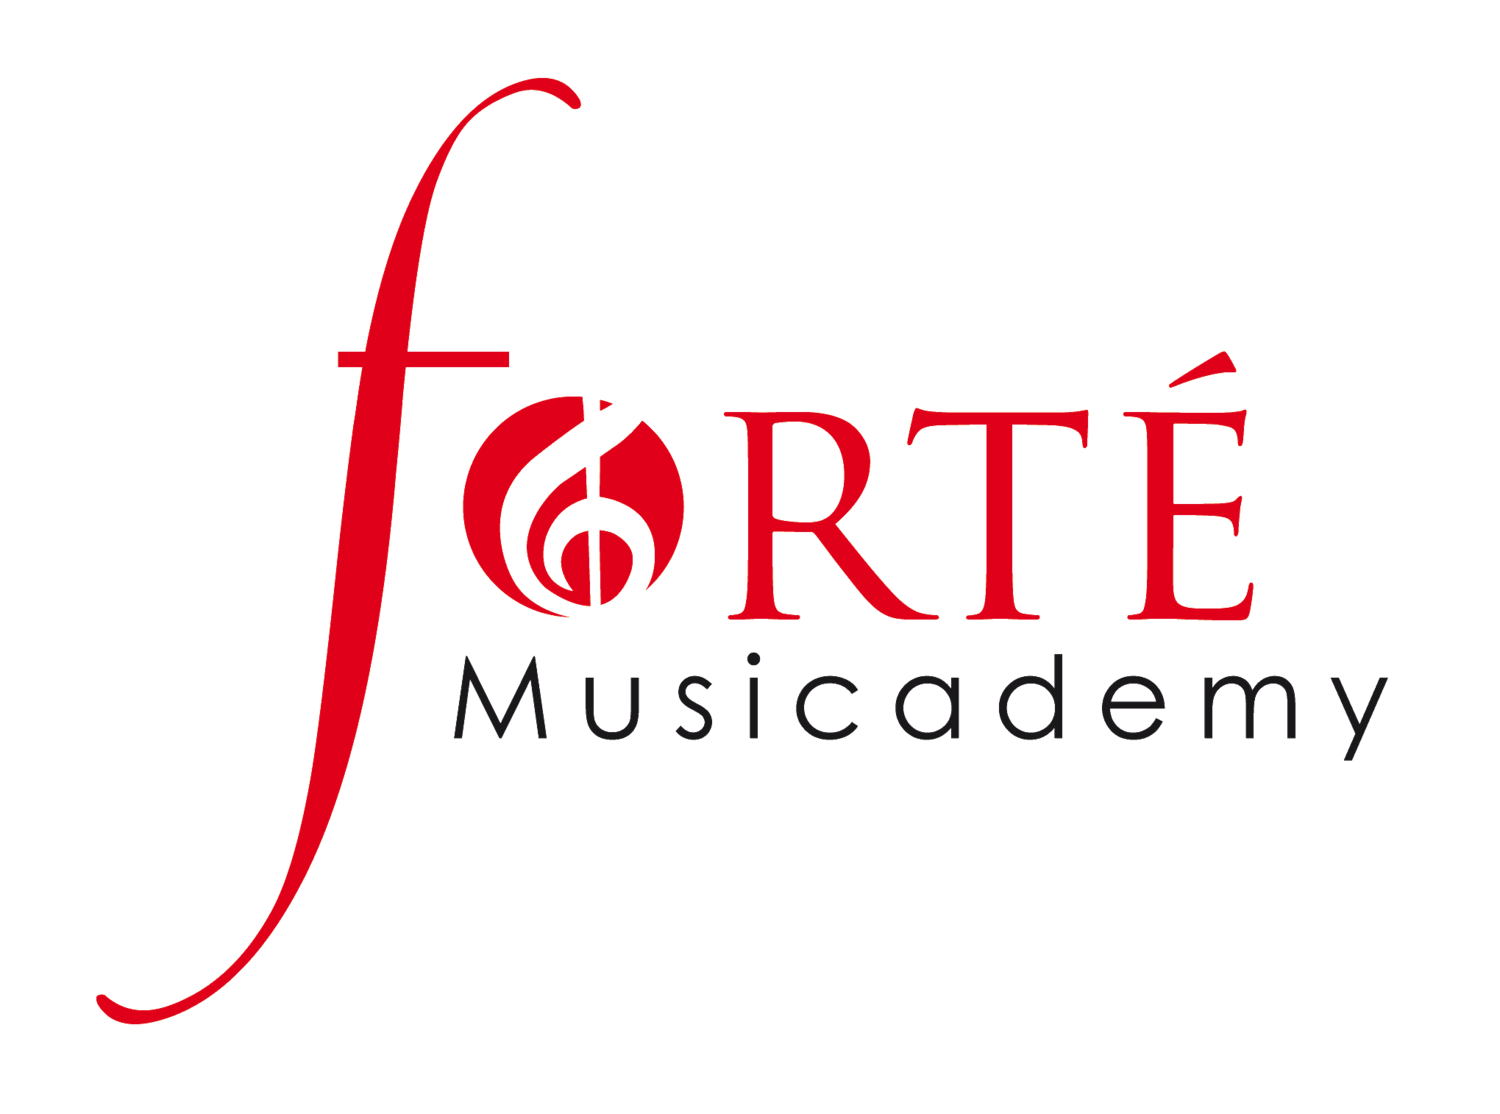 Forté Musicademy